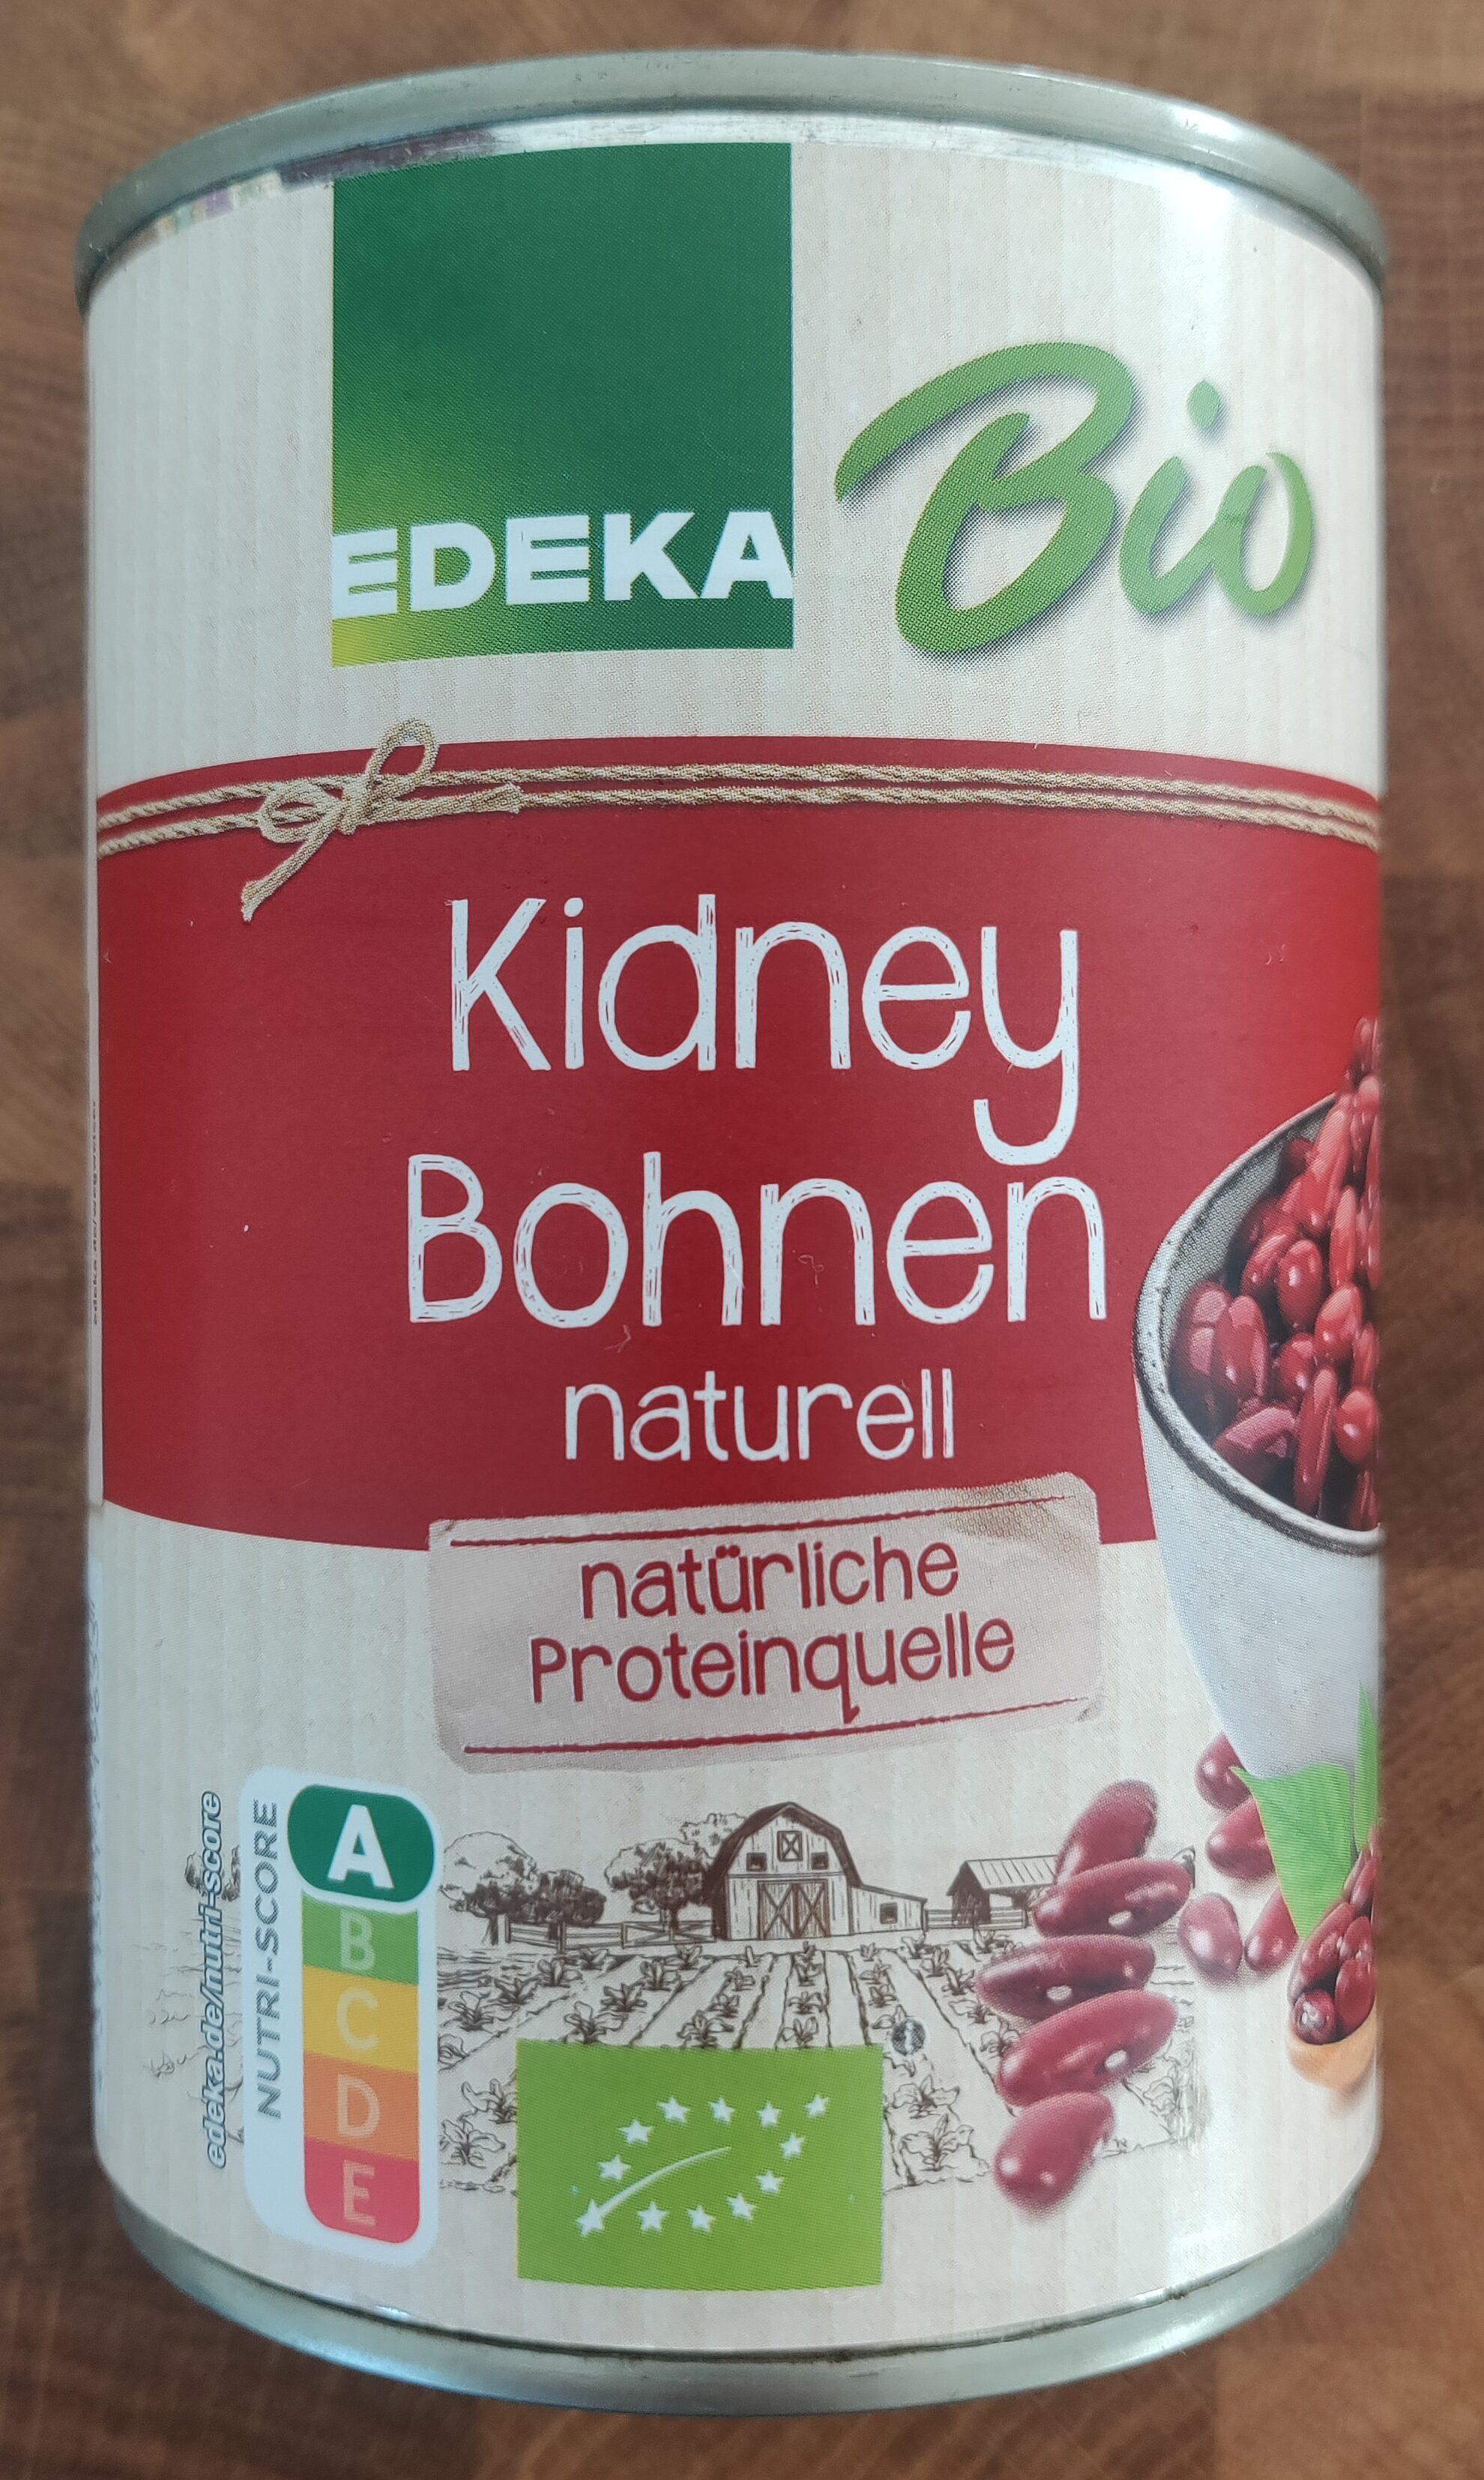 Kidney Bohnen naturell - Product - de